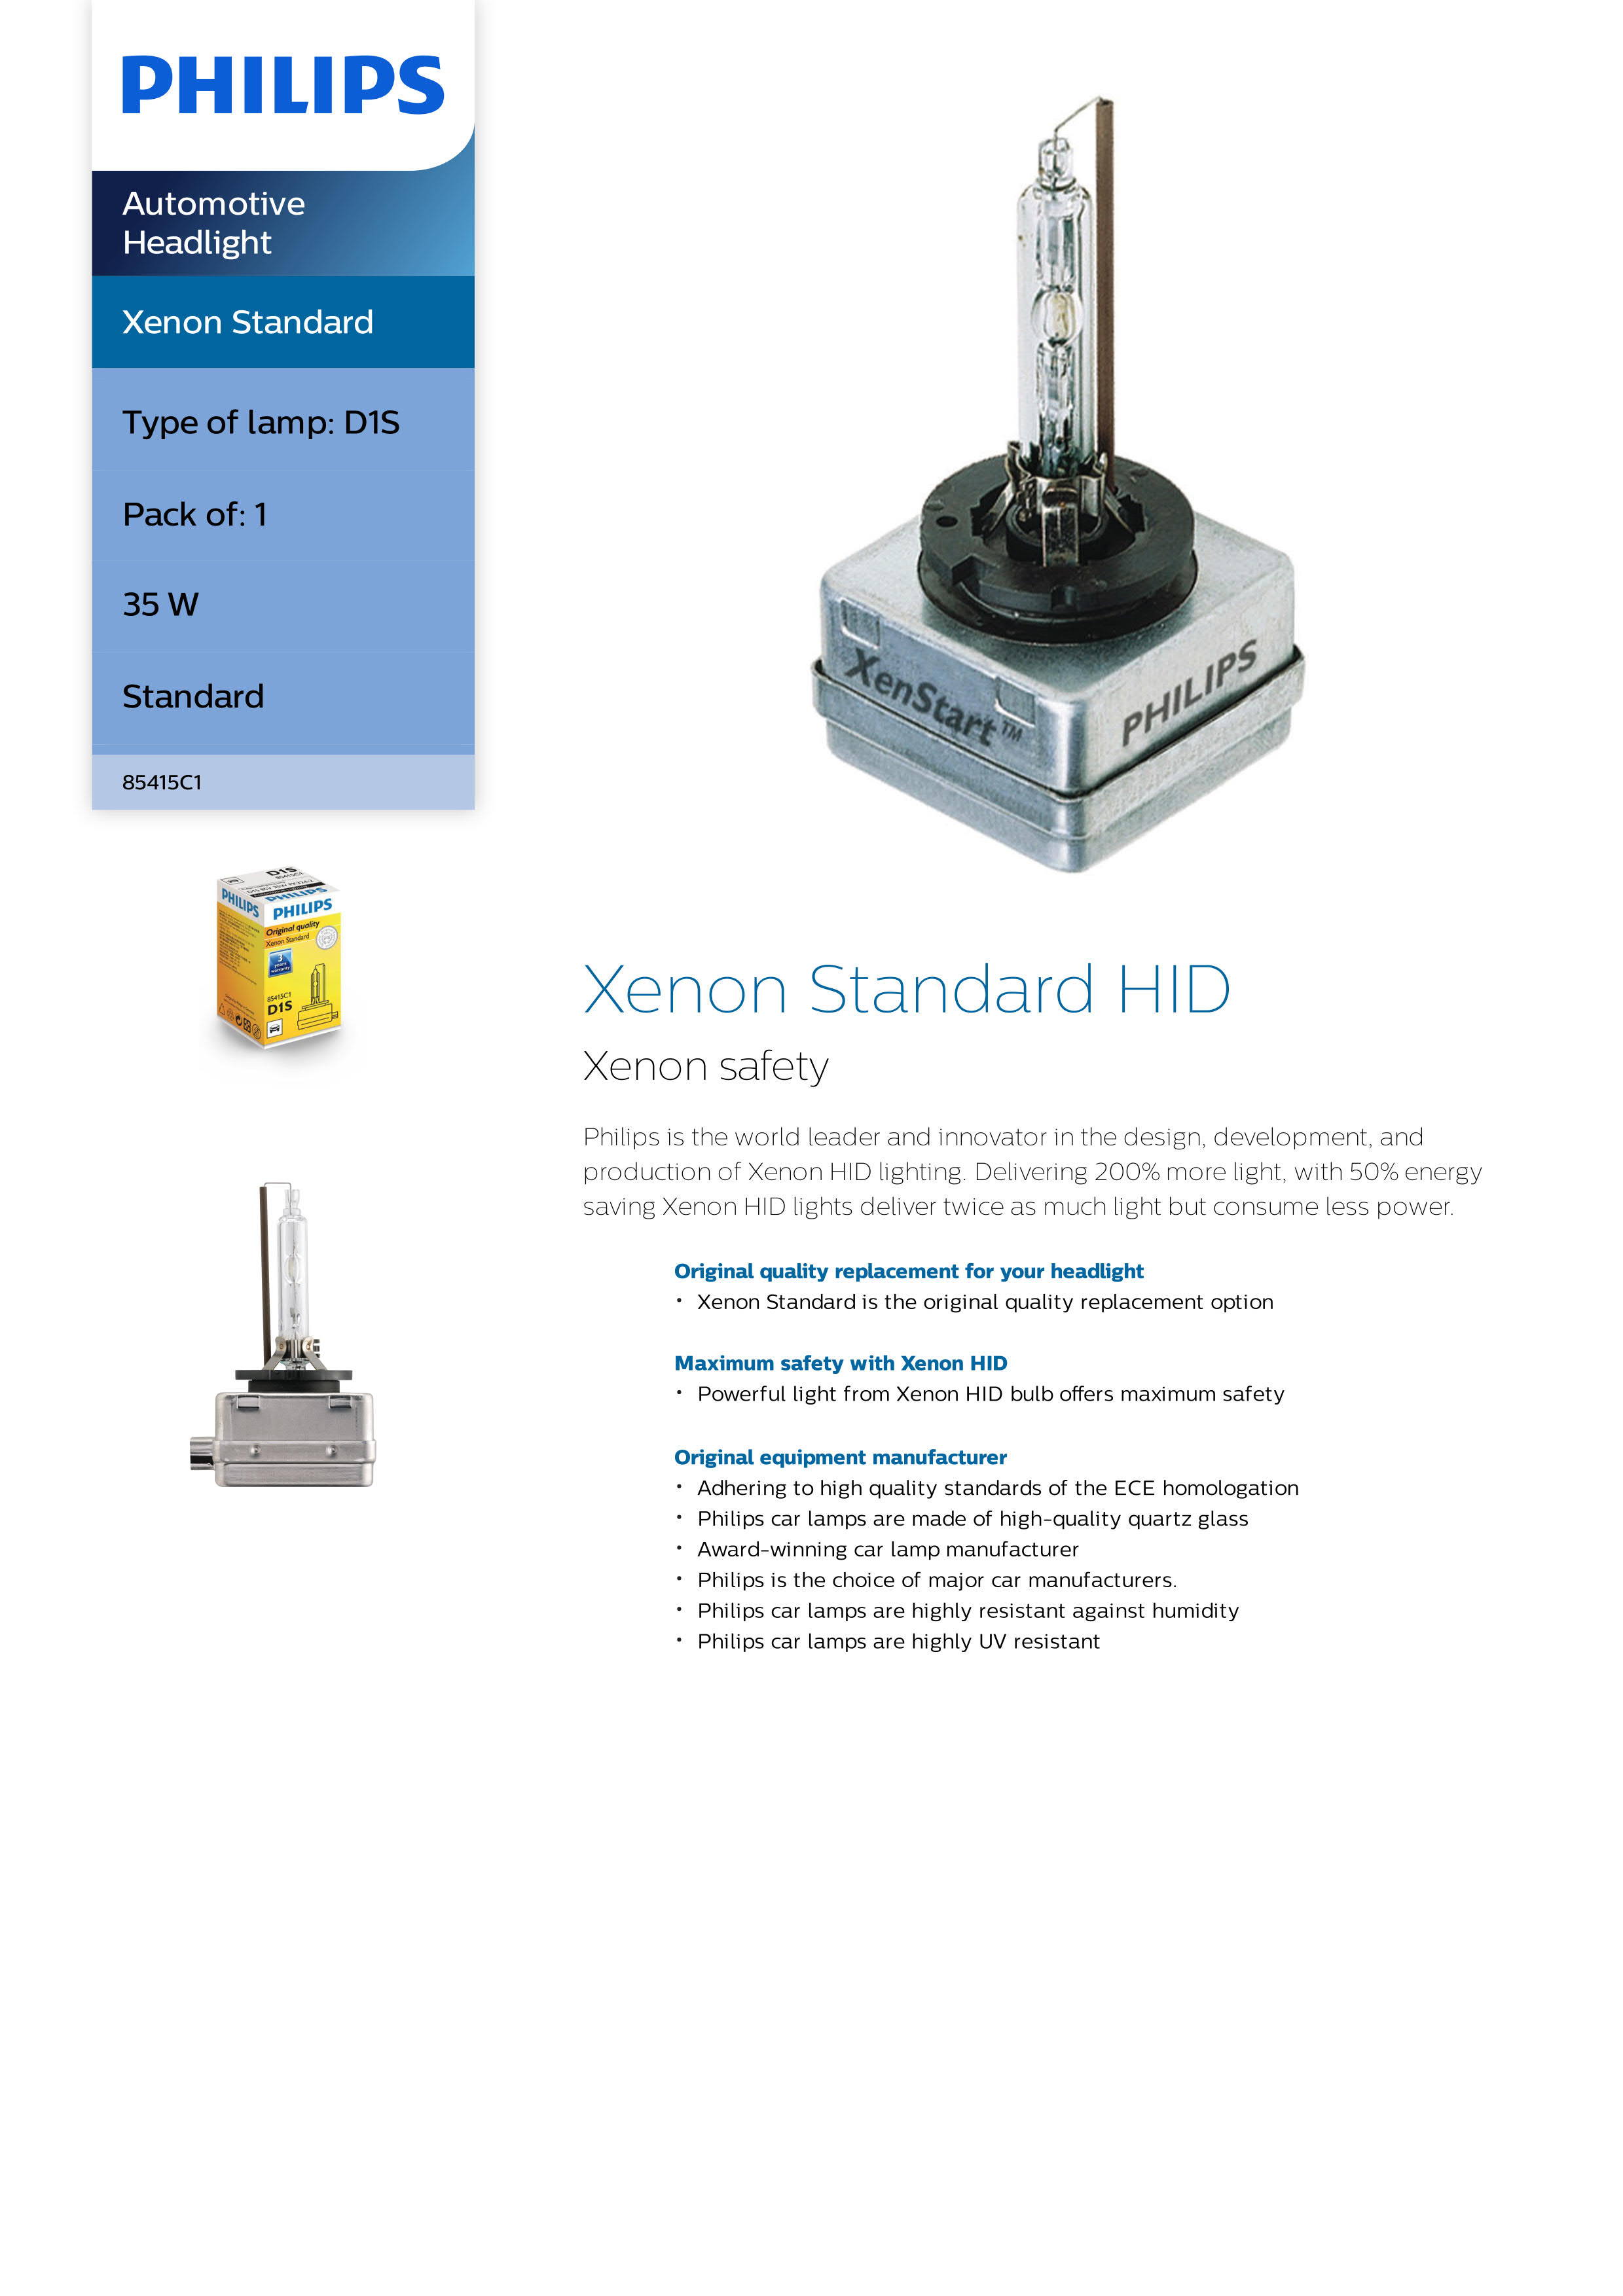 PHILIPS Xenon Standard Automotive Headlight 85V 35W 85415c1 : PK32d-2 867000095747